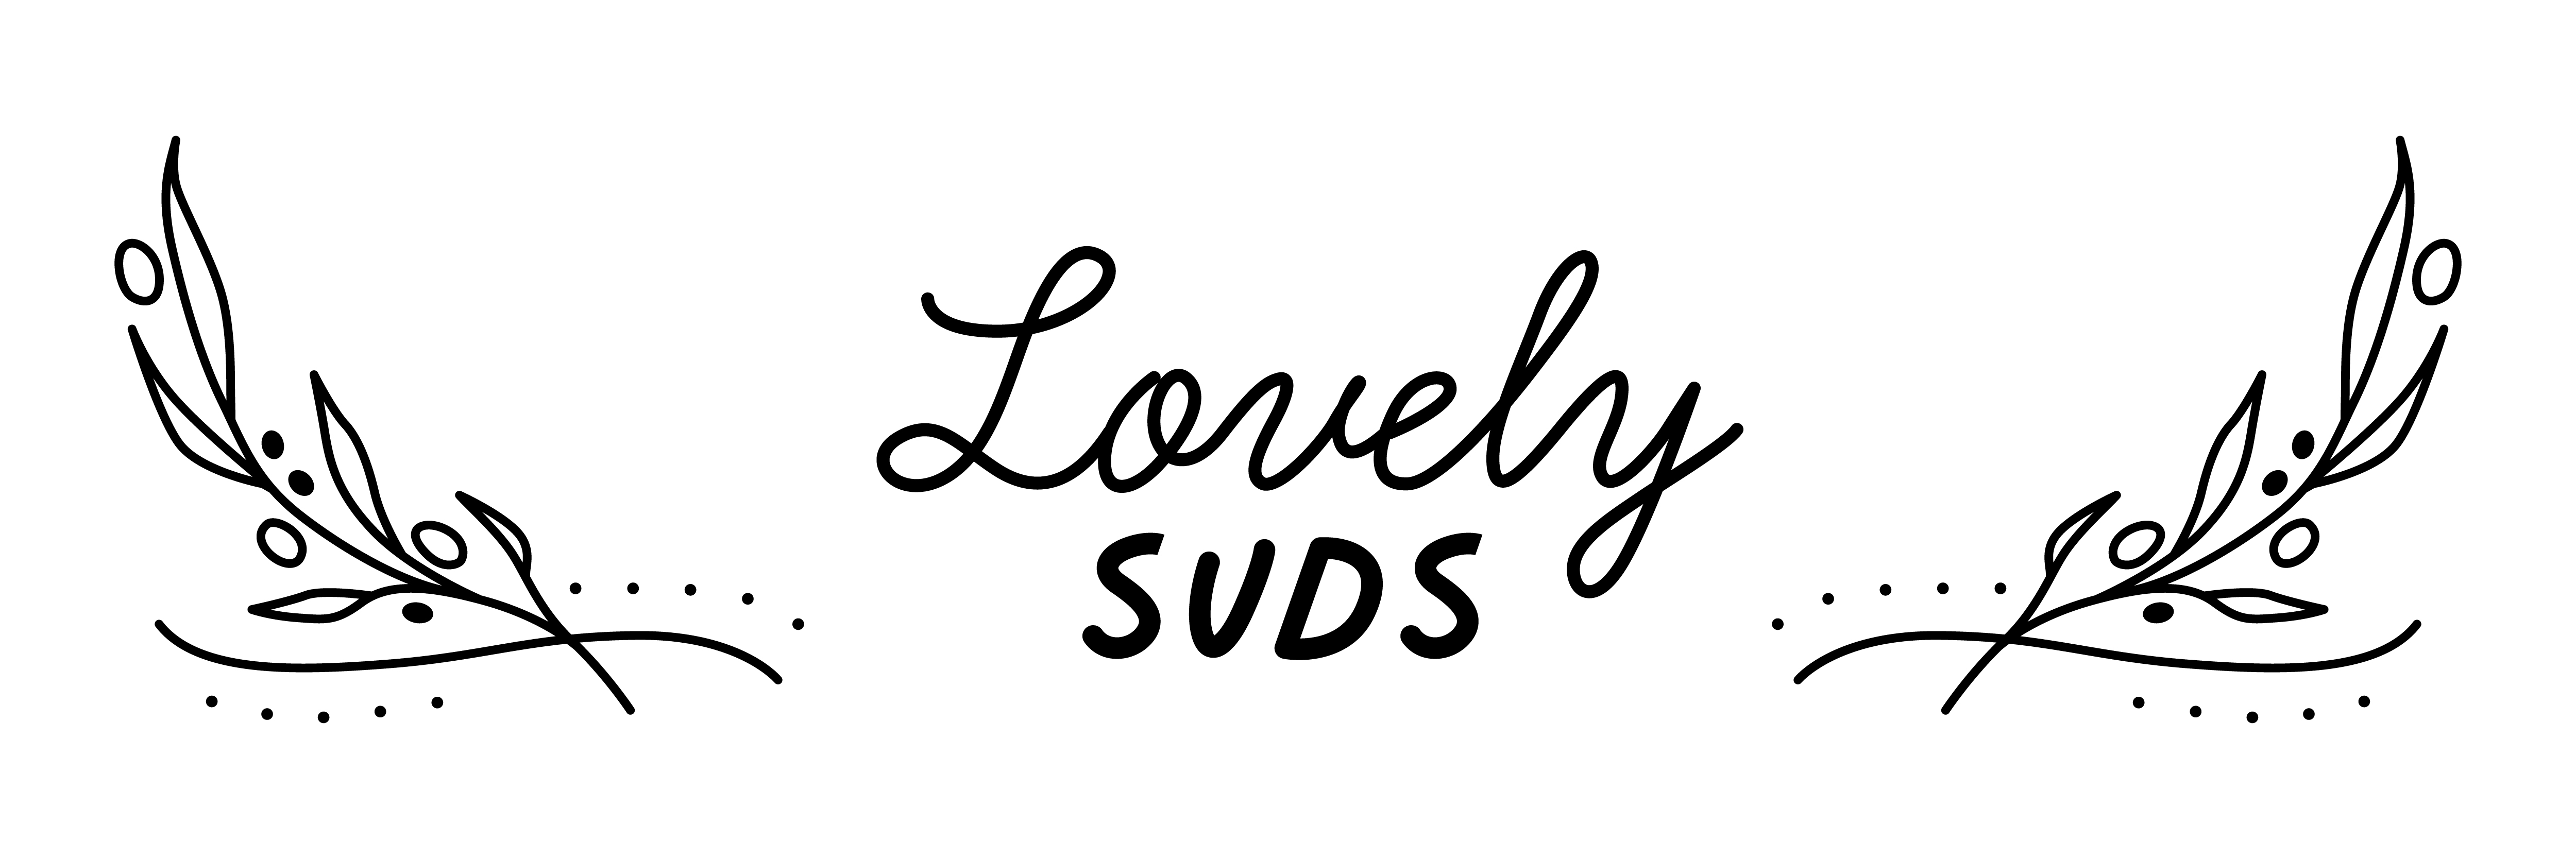 Lovely Suds: www.Lovelys.xyz